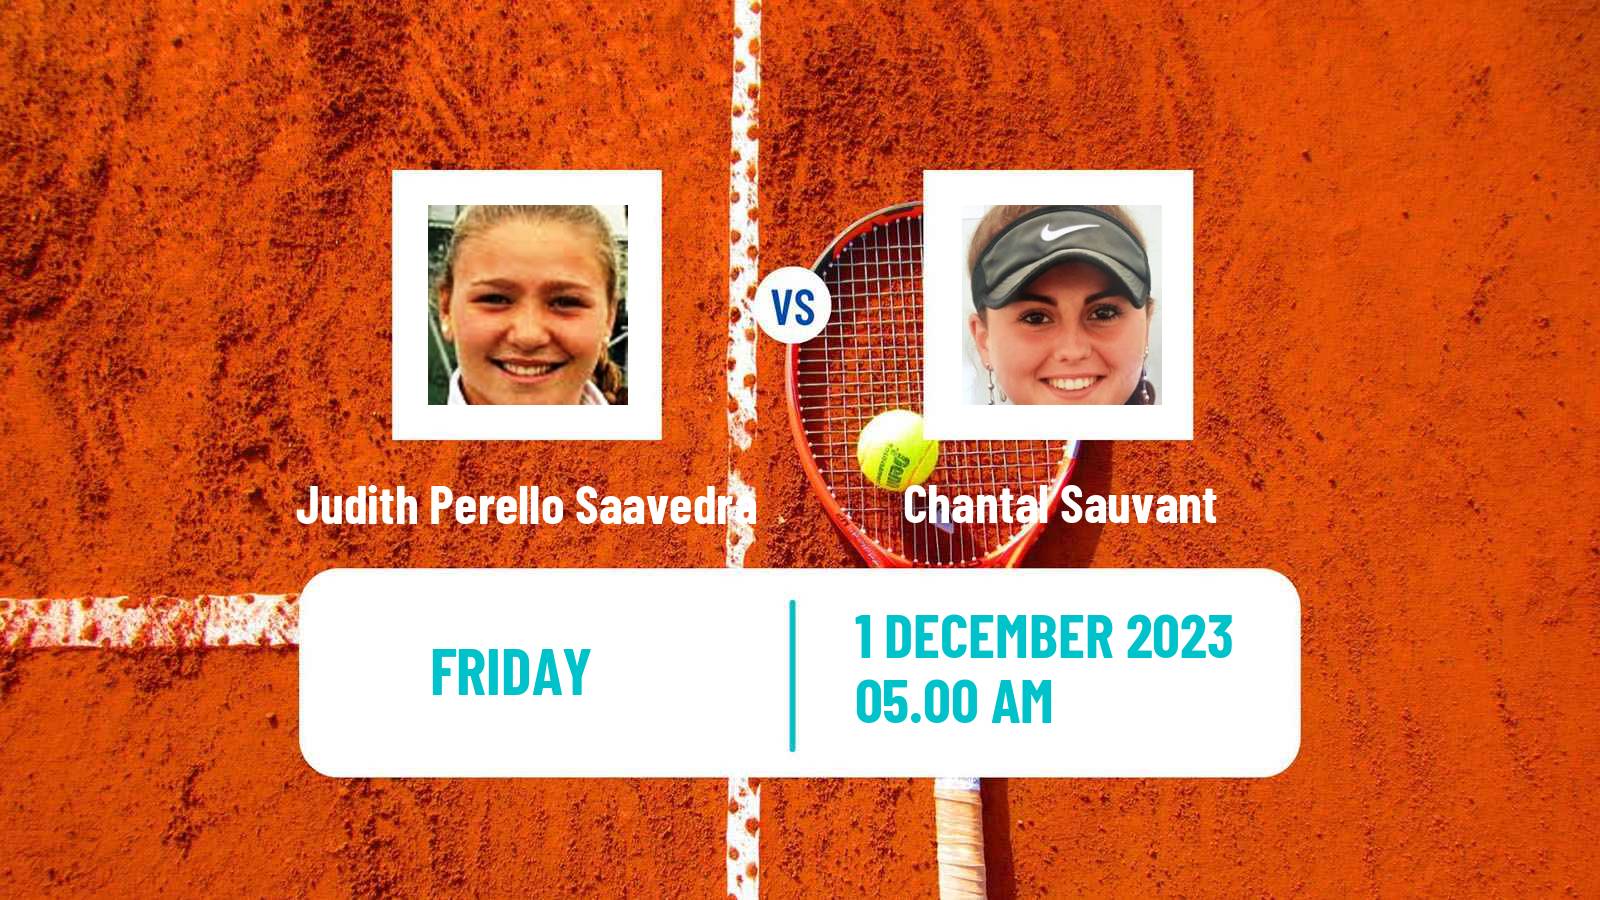 Tennis ITF W15 Valencia Women Judith Perello Saavedra - Chantal Sauvant